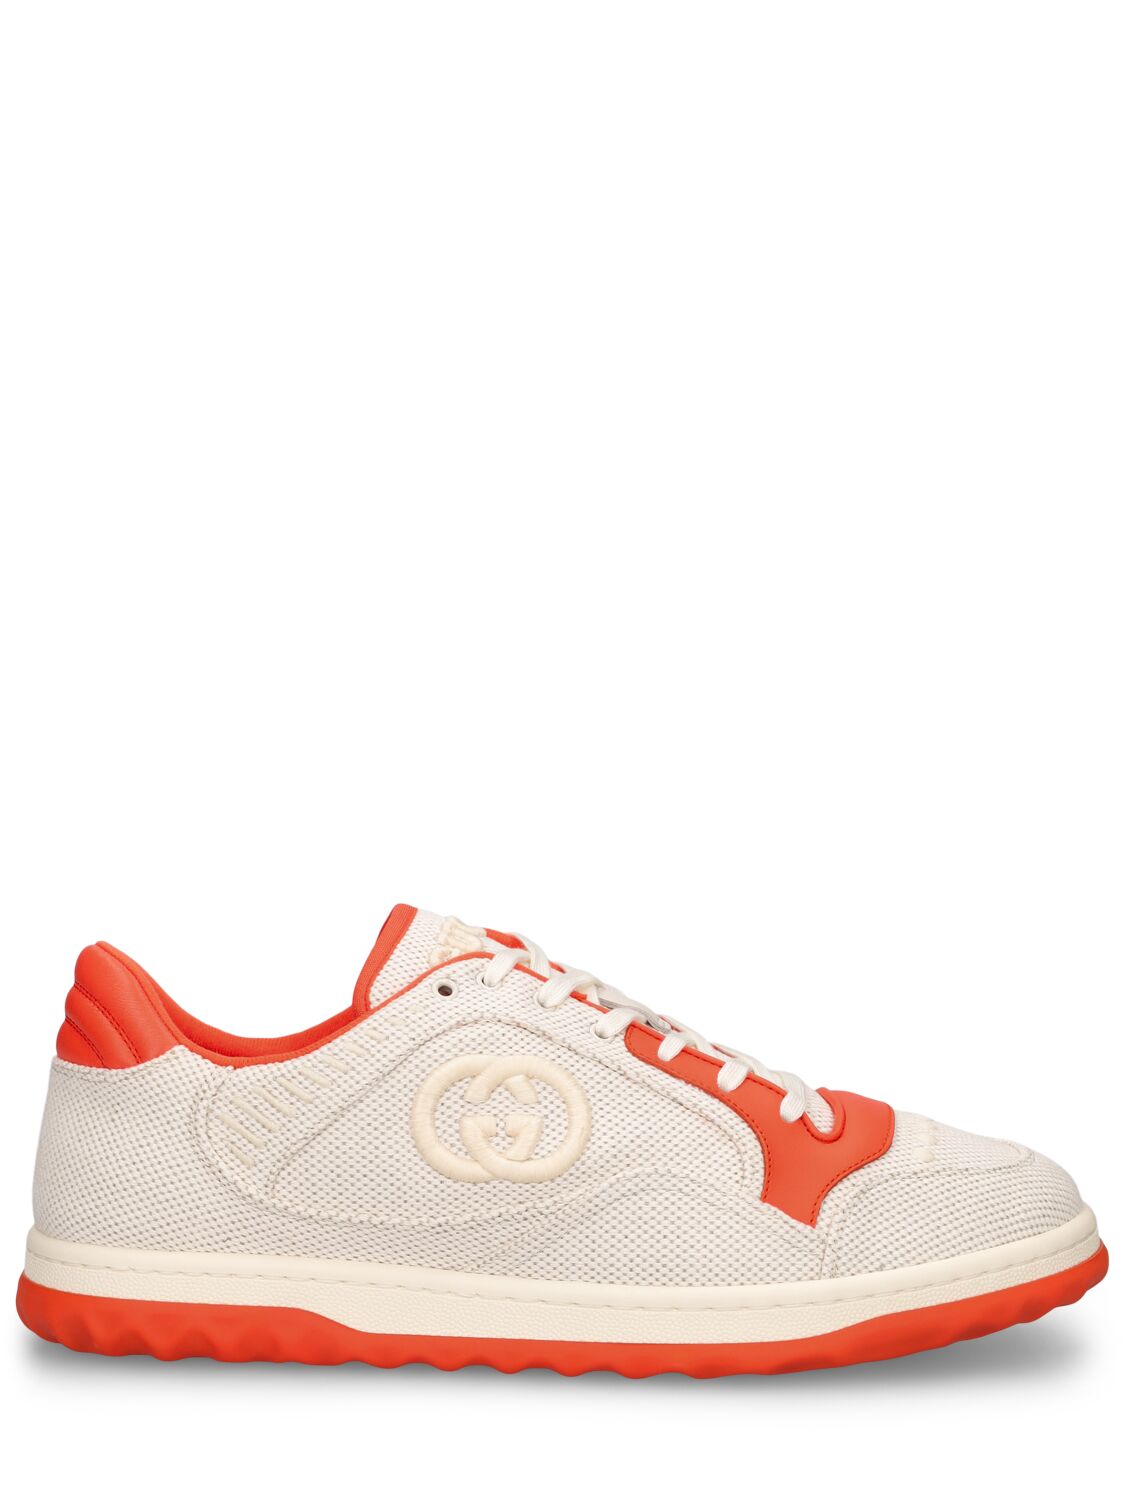 Gucci Mac80 Leather Sneakers In White,orange